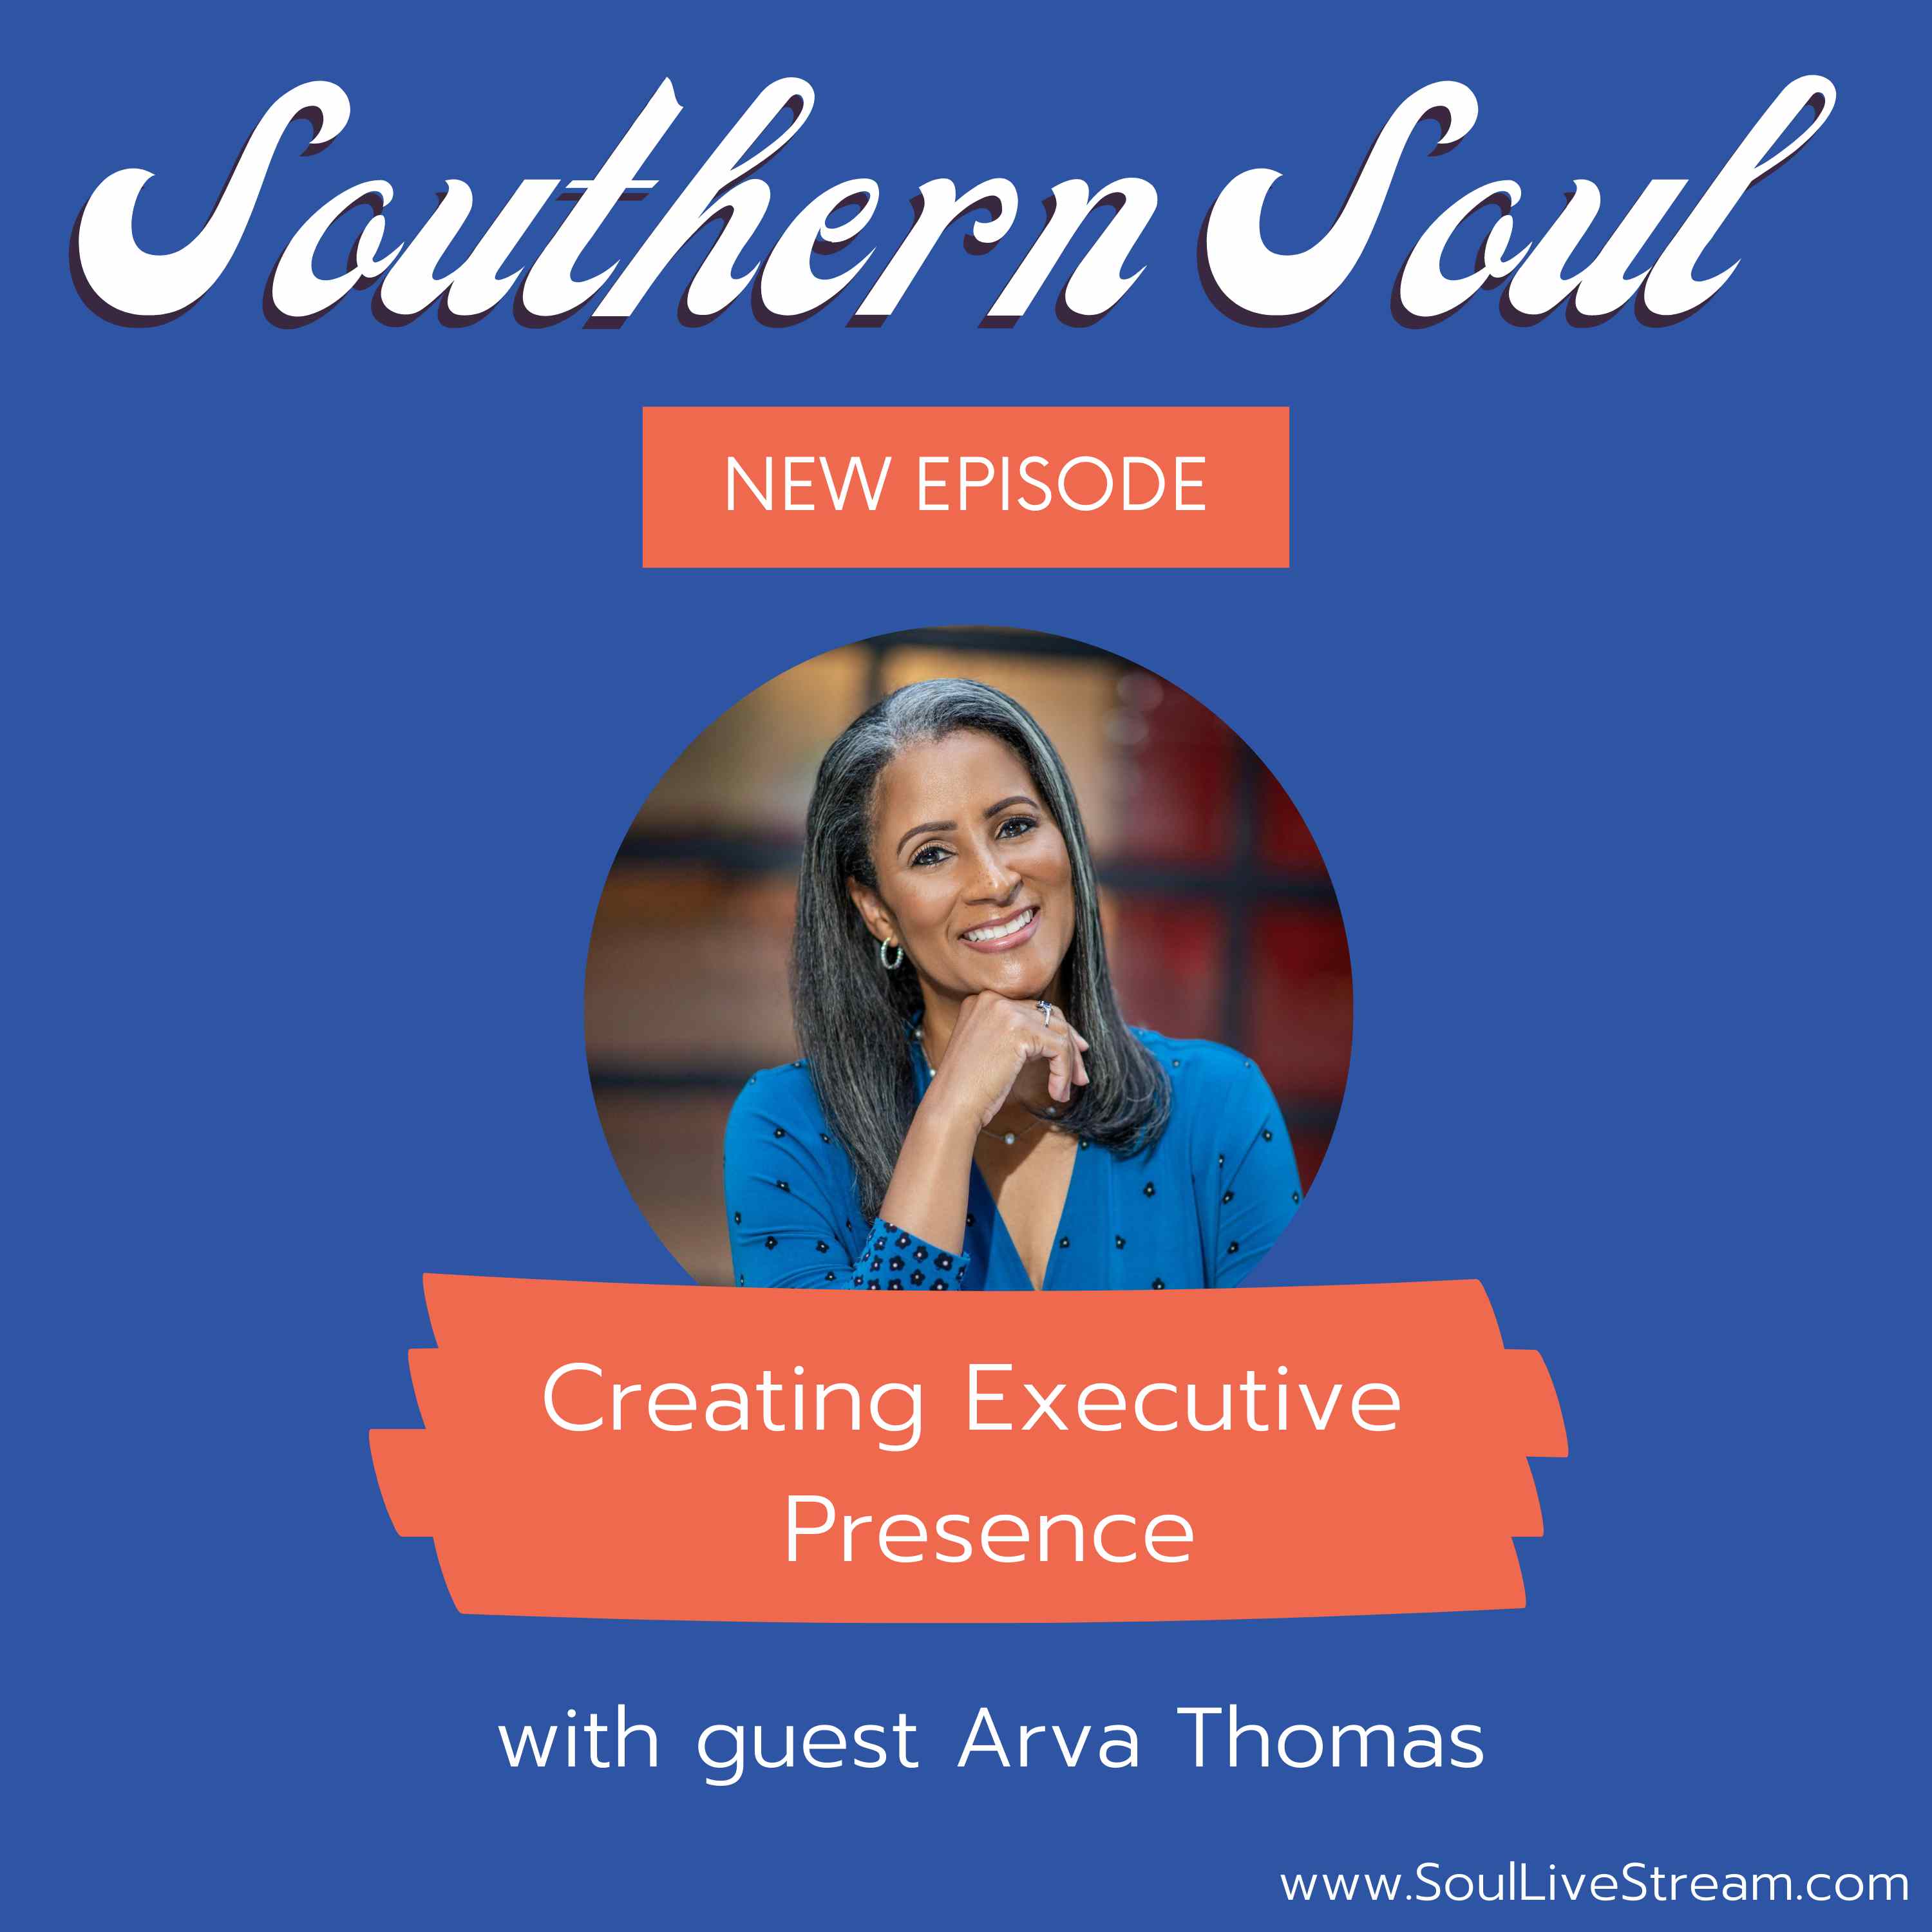 Creating Executive Presence with Arva Thomas, Public Speaking Coach Image